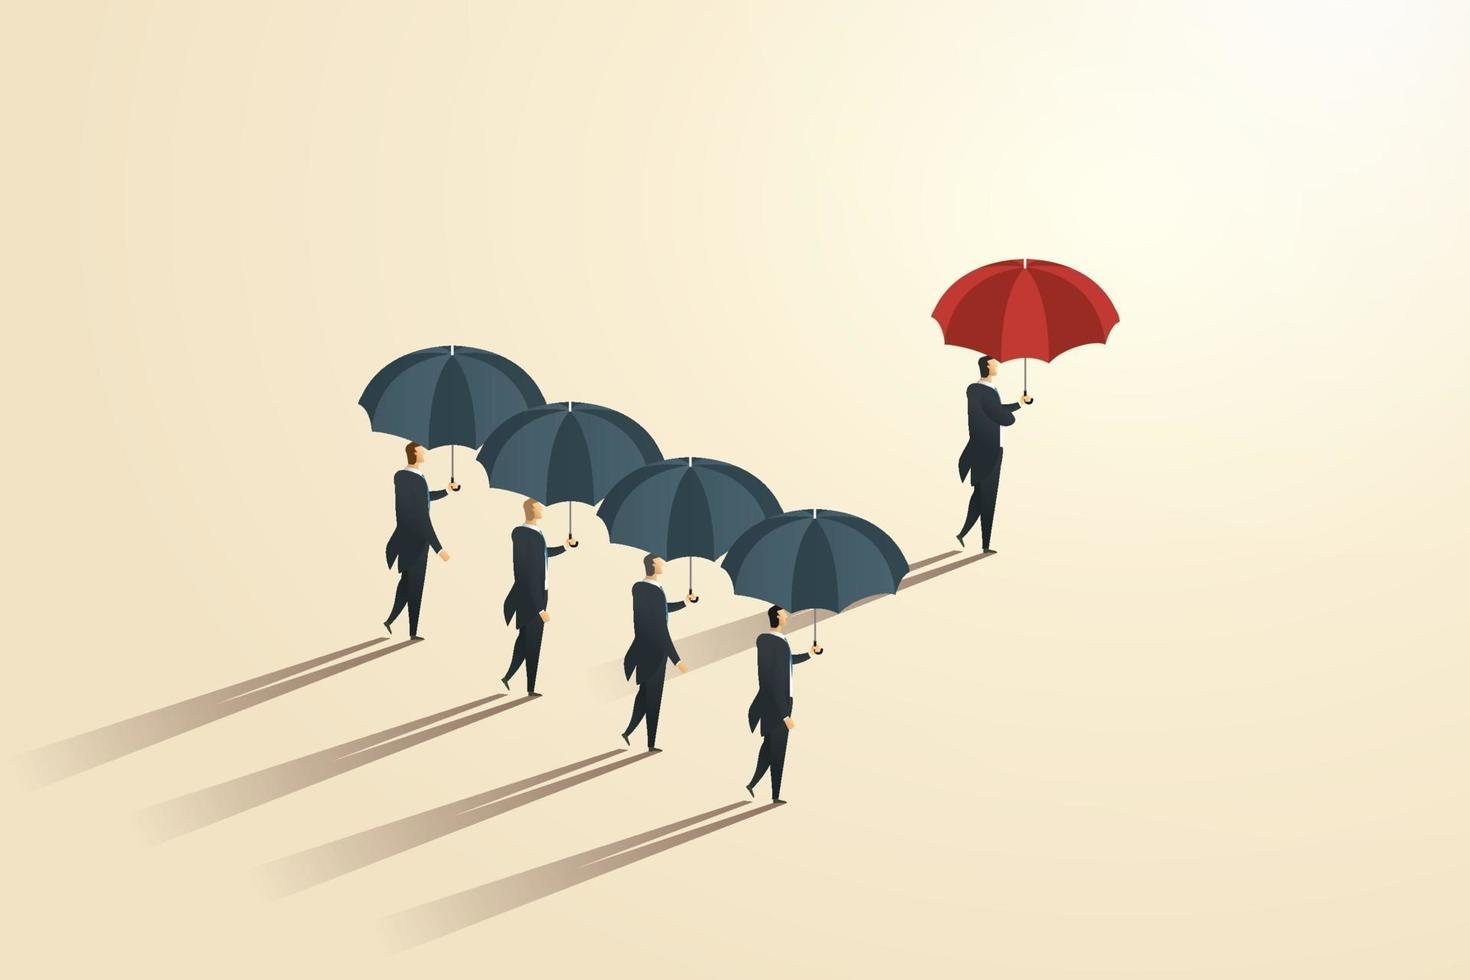 Diferentes hombres de negocios de concepto con paraguas rojos se destacan. vector